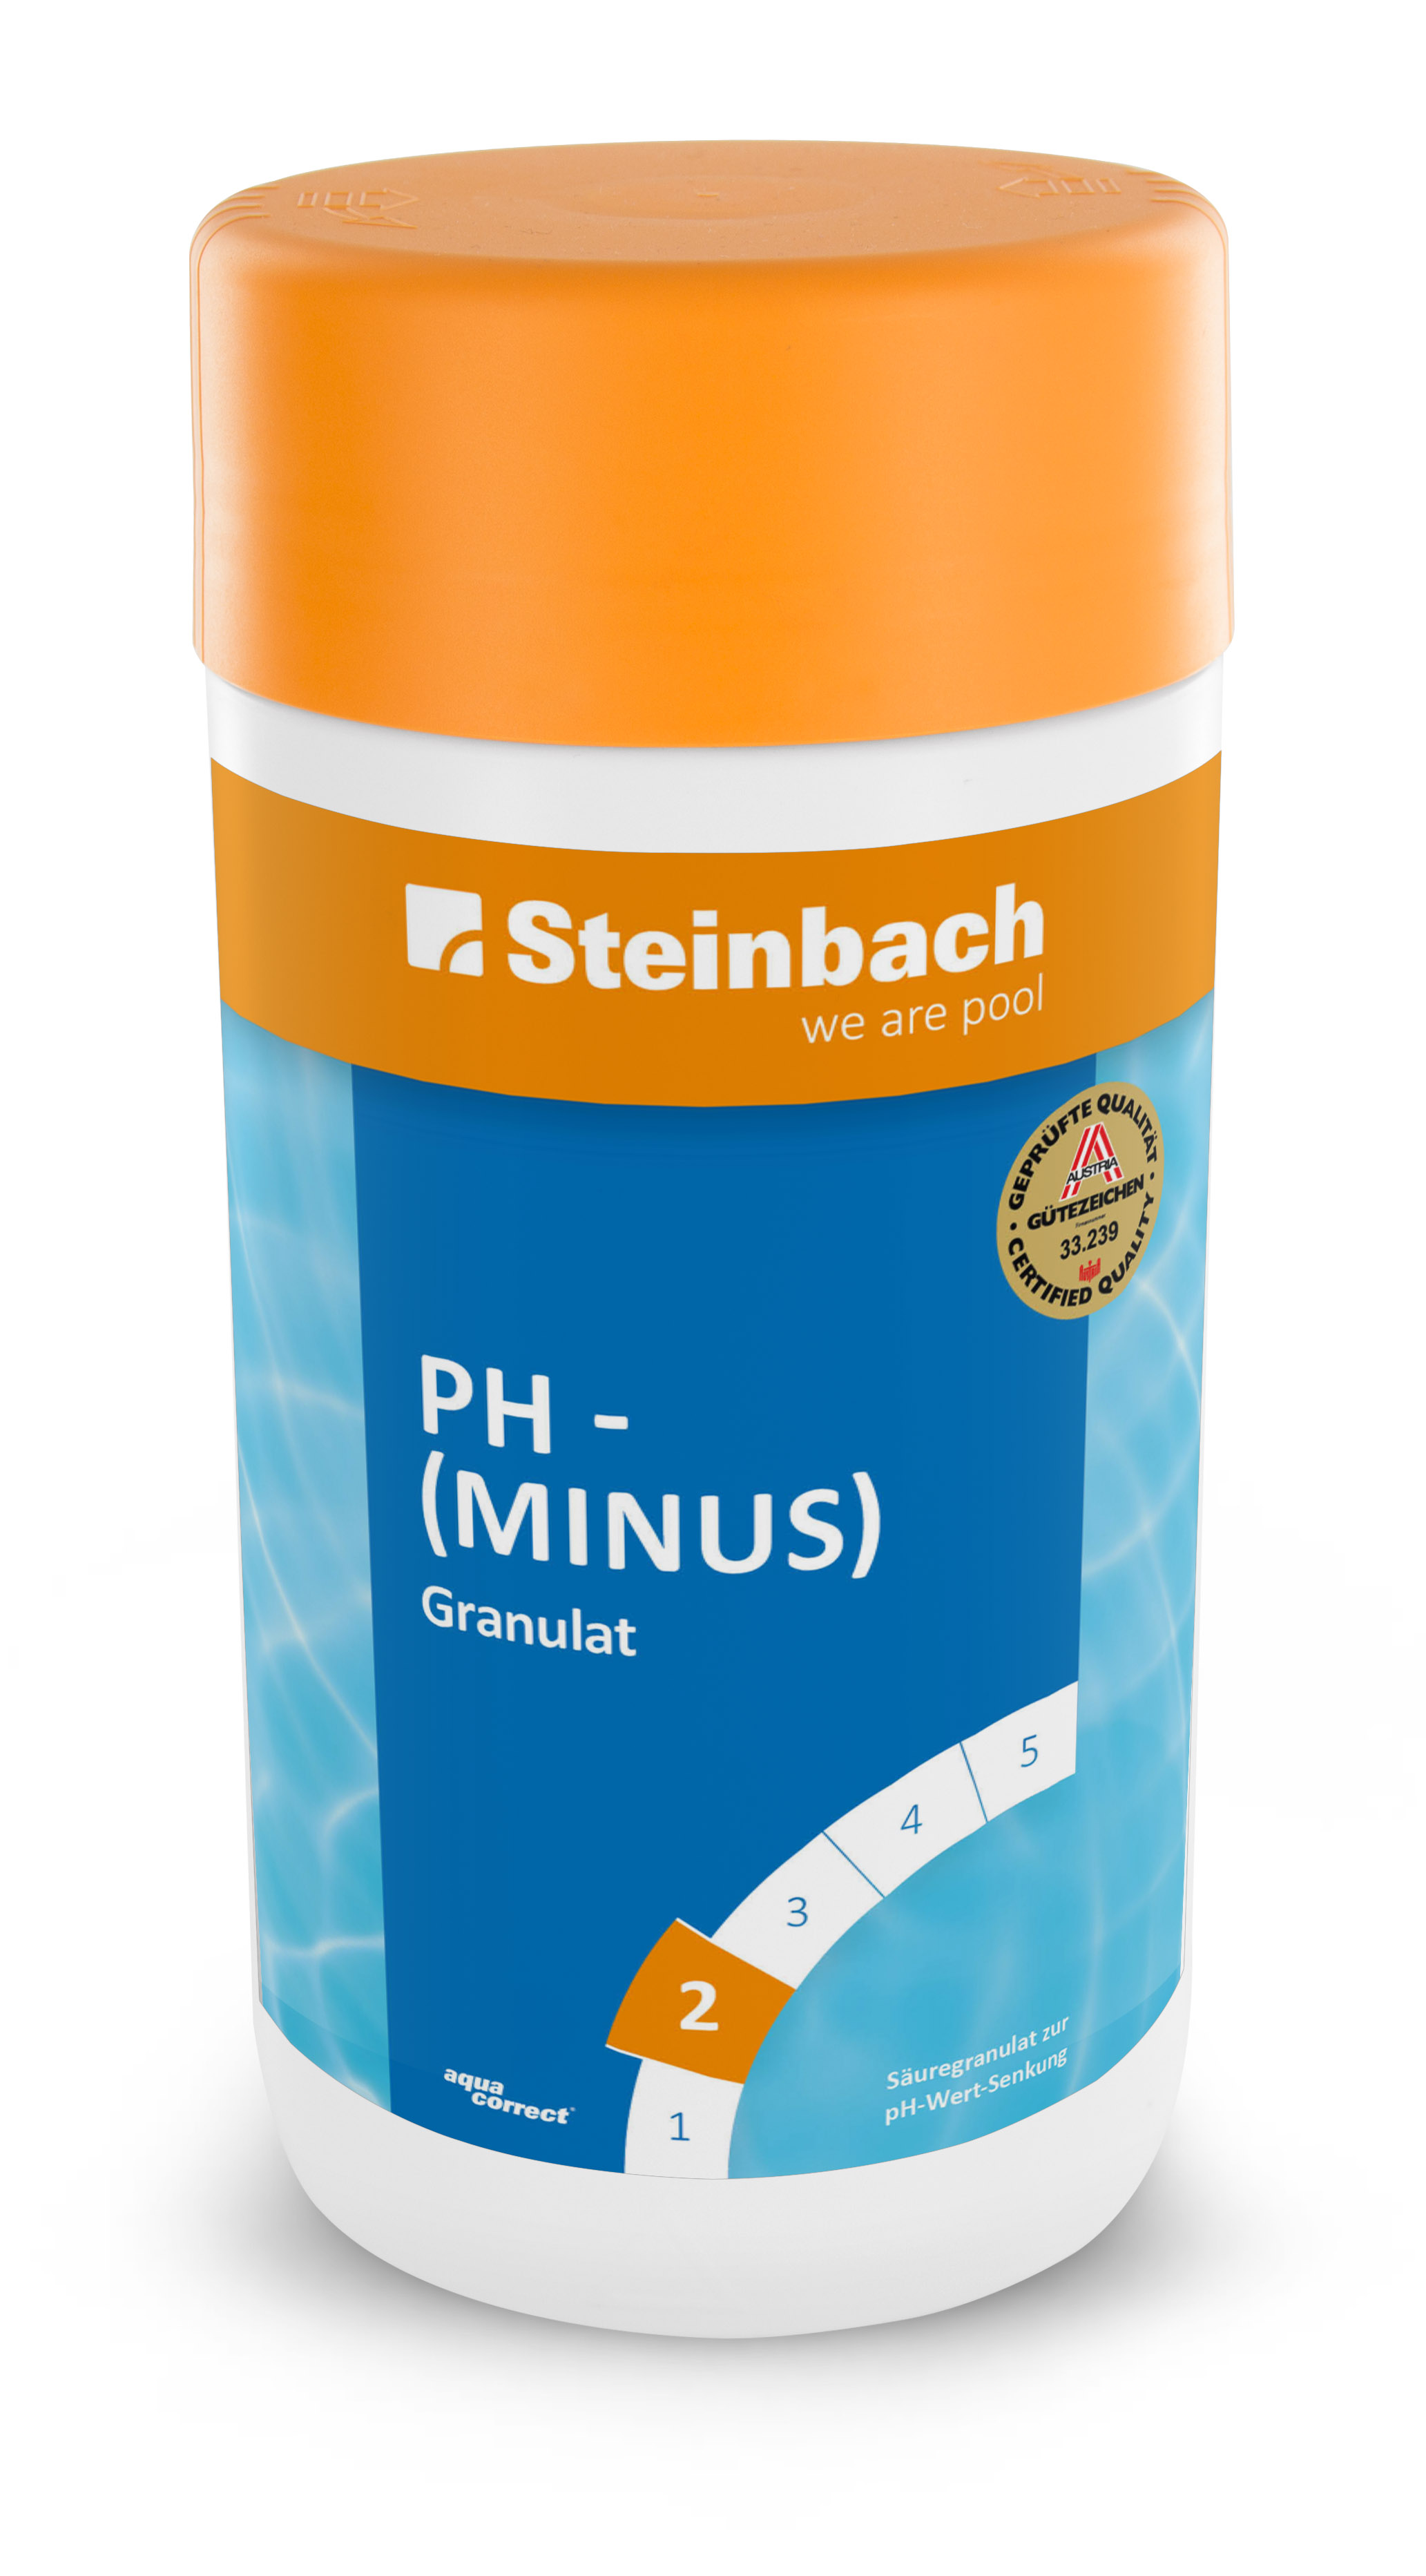 Steinbach pH - (minus) Granulat, 1,5 kg